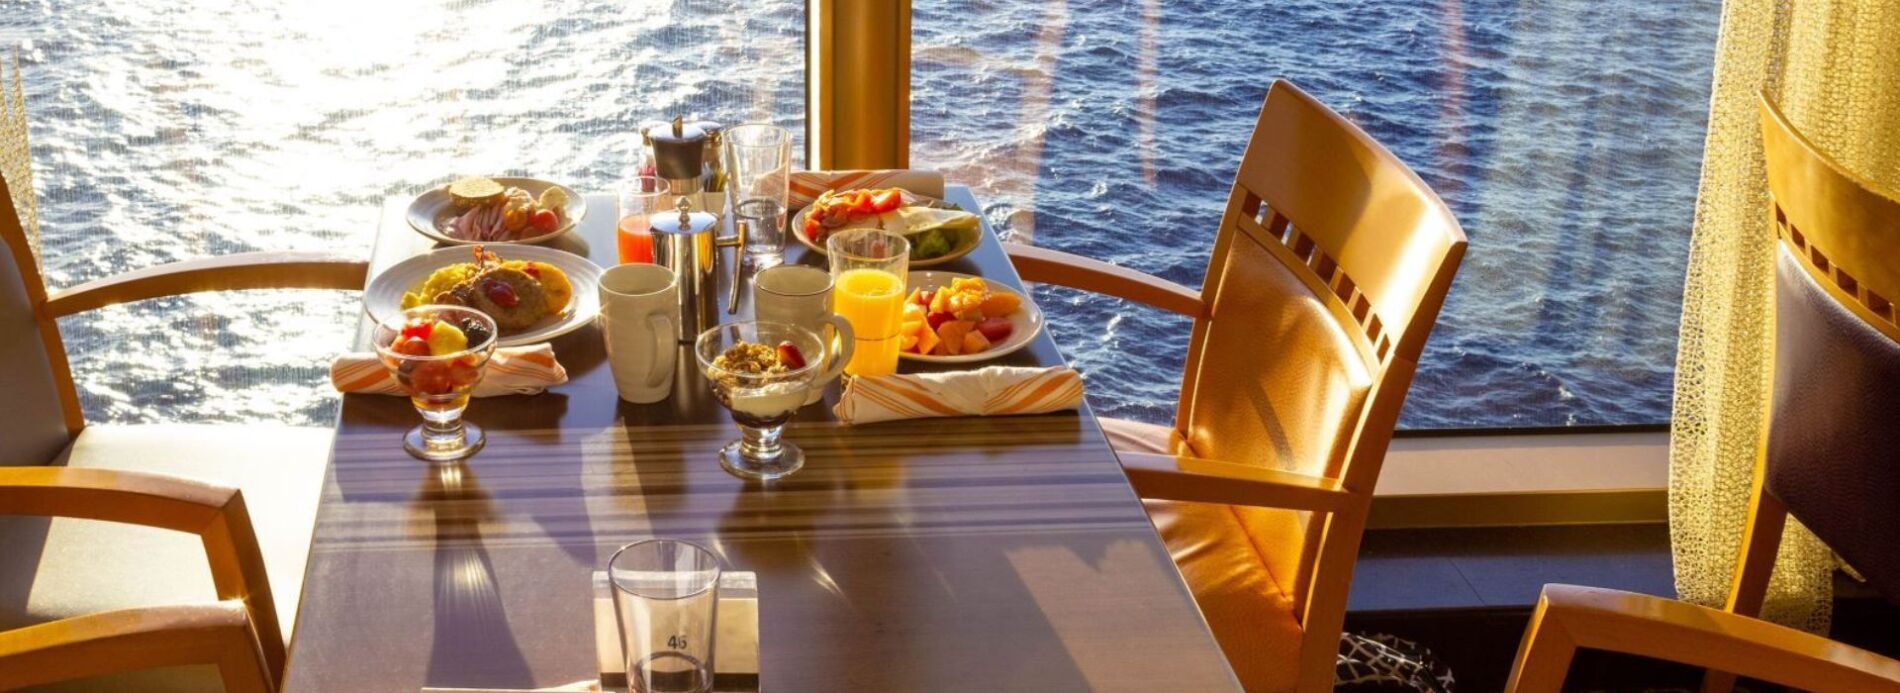 Table set for dinner cruise